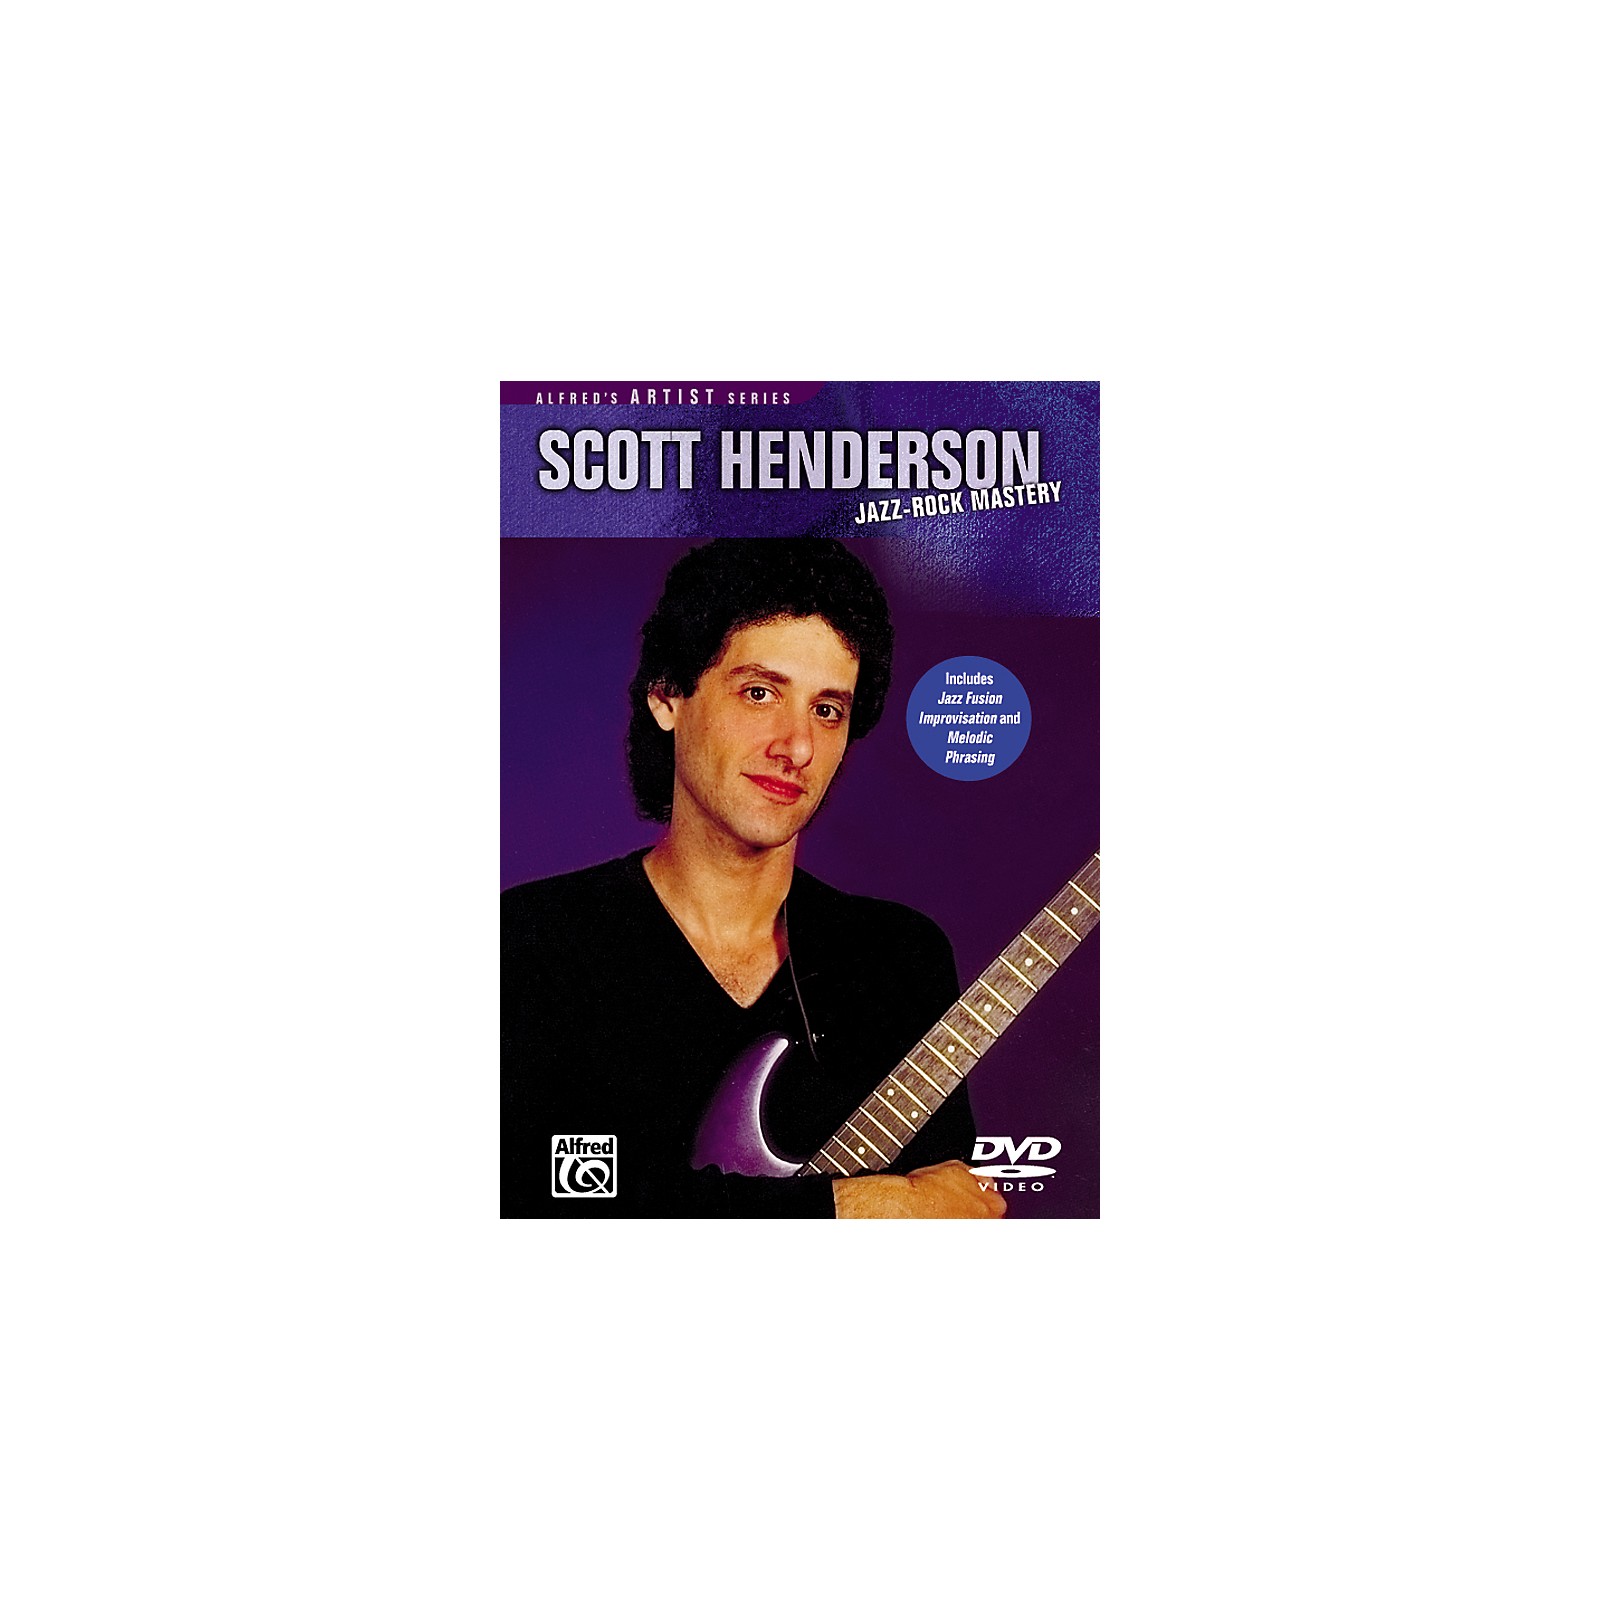 Scott henderson jazz rock mastery pdf